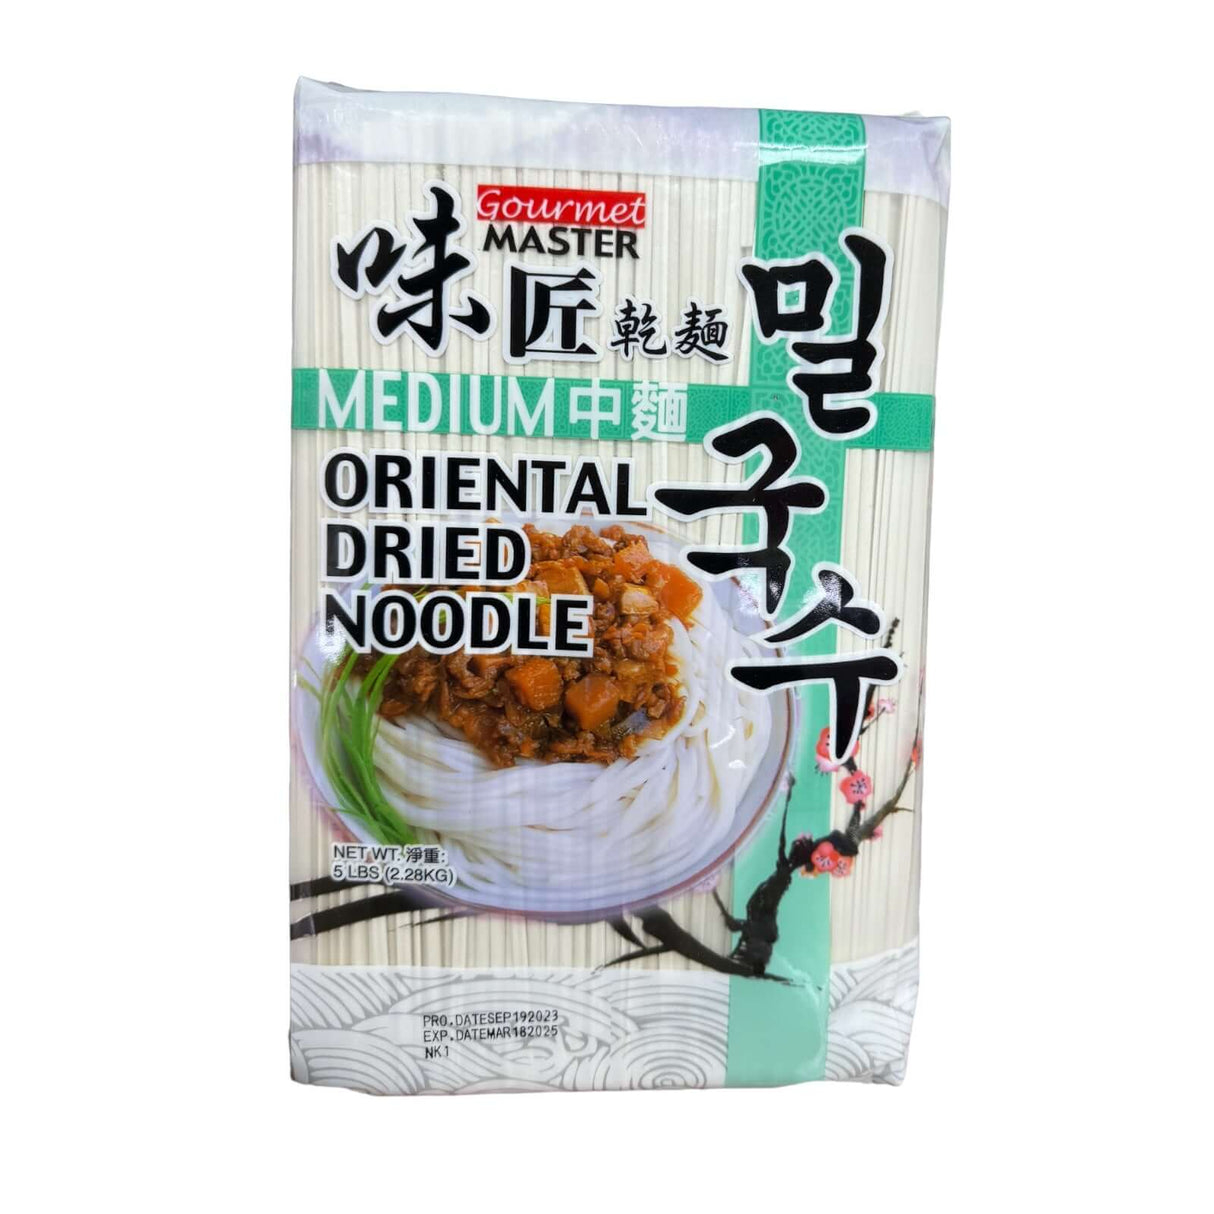 Gourmet Master Medium Oriental Dried Noodle